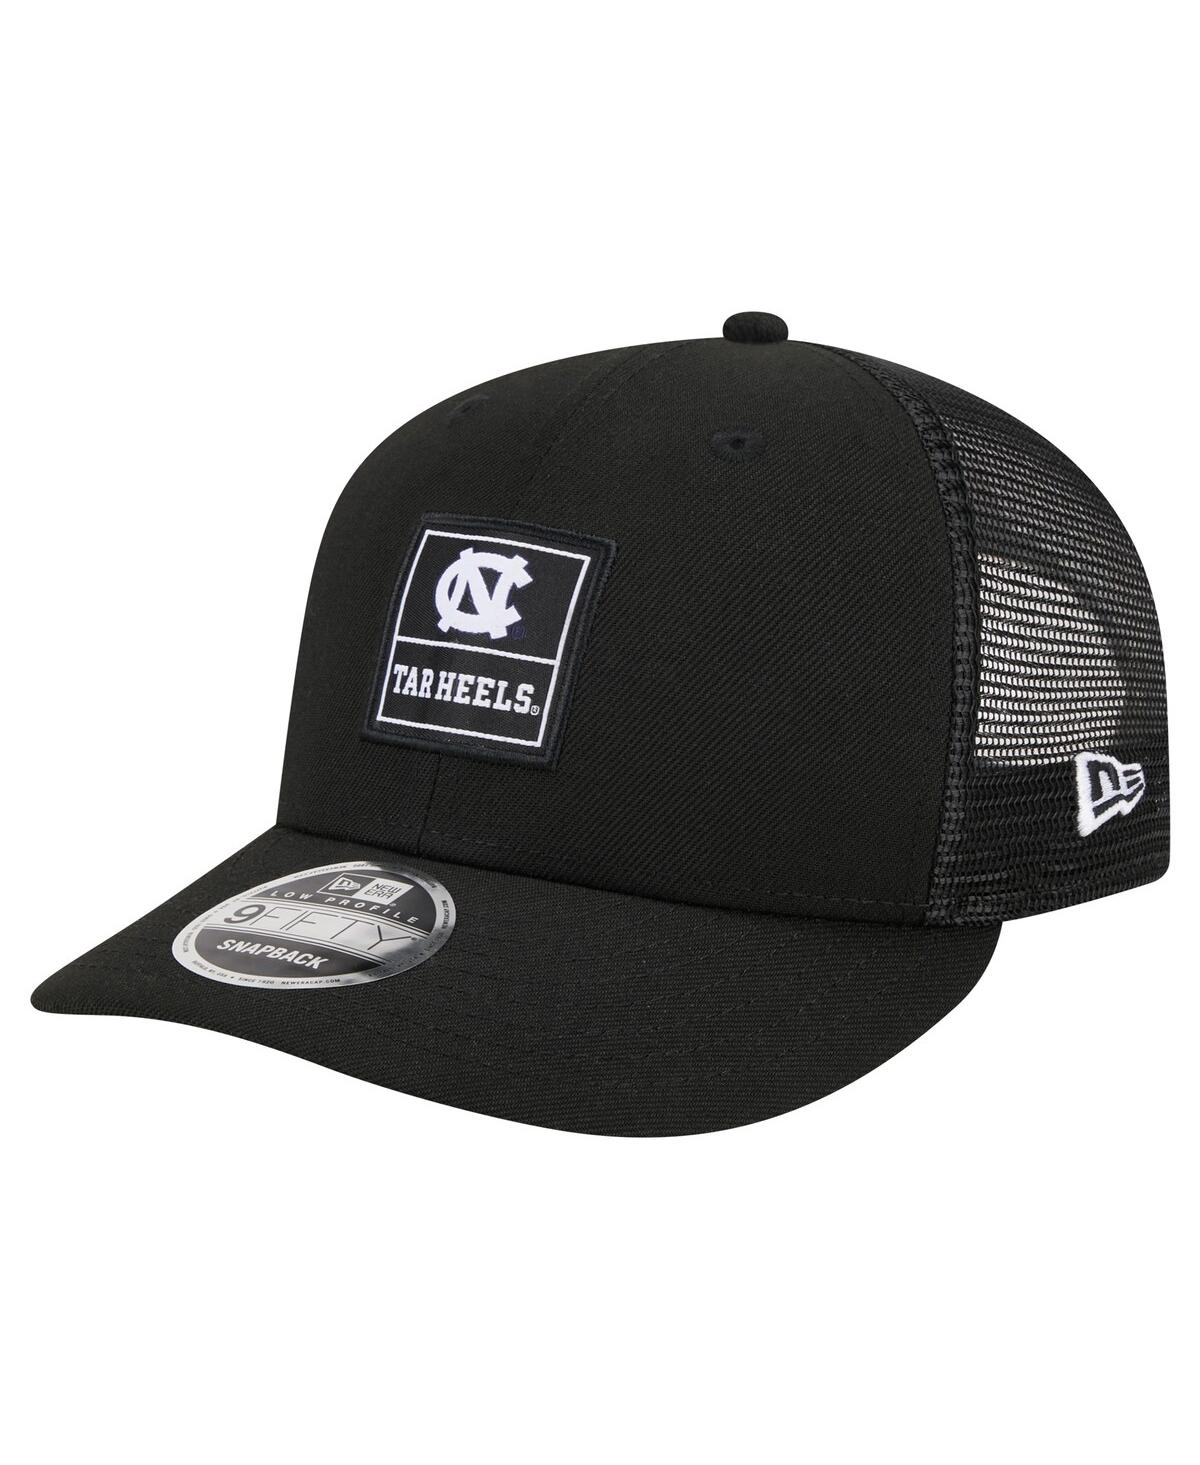 Shop New Era Men's Black North Carolina Tar Heels Labeled 9fifty Snapback Hat